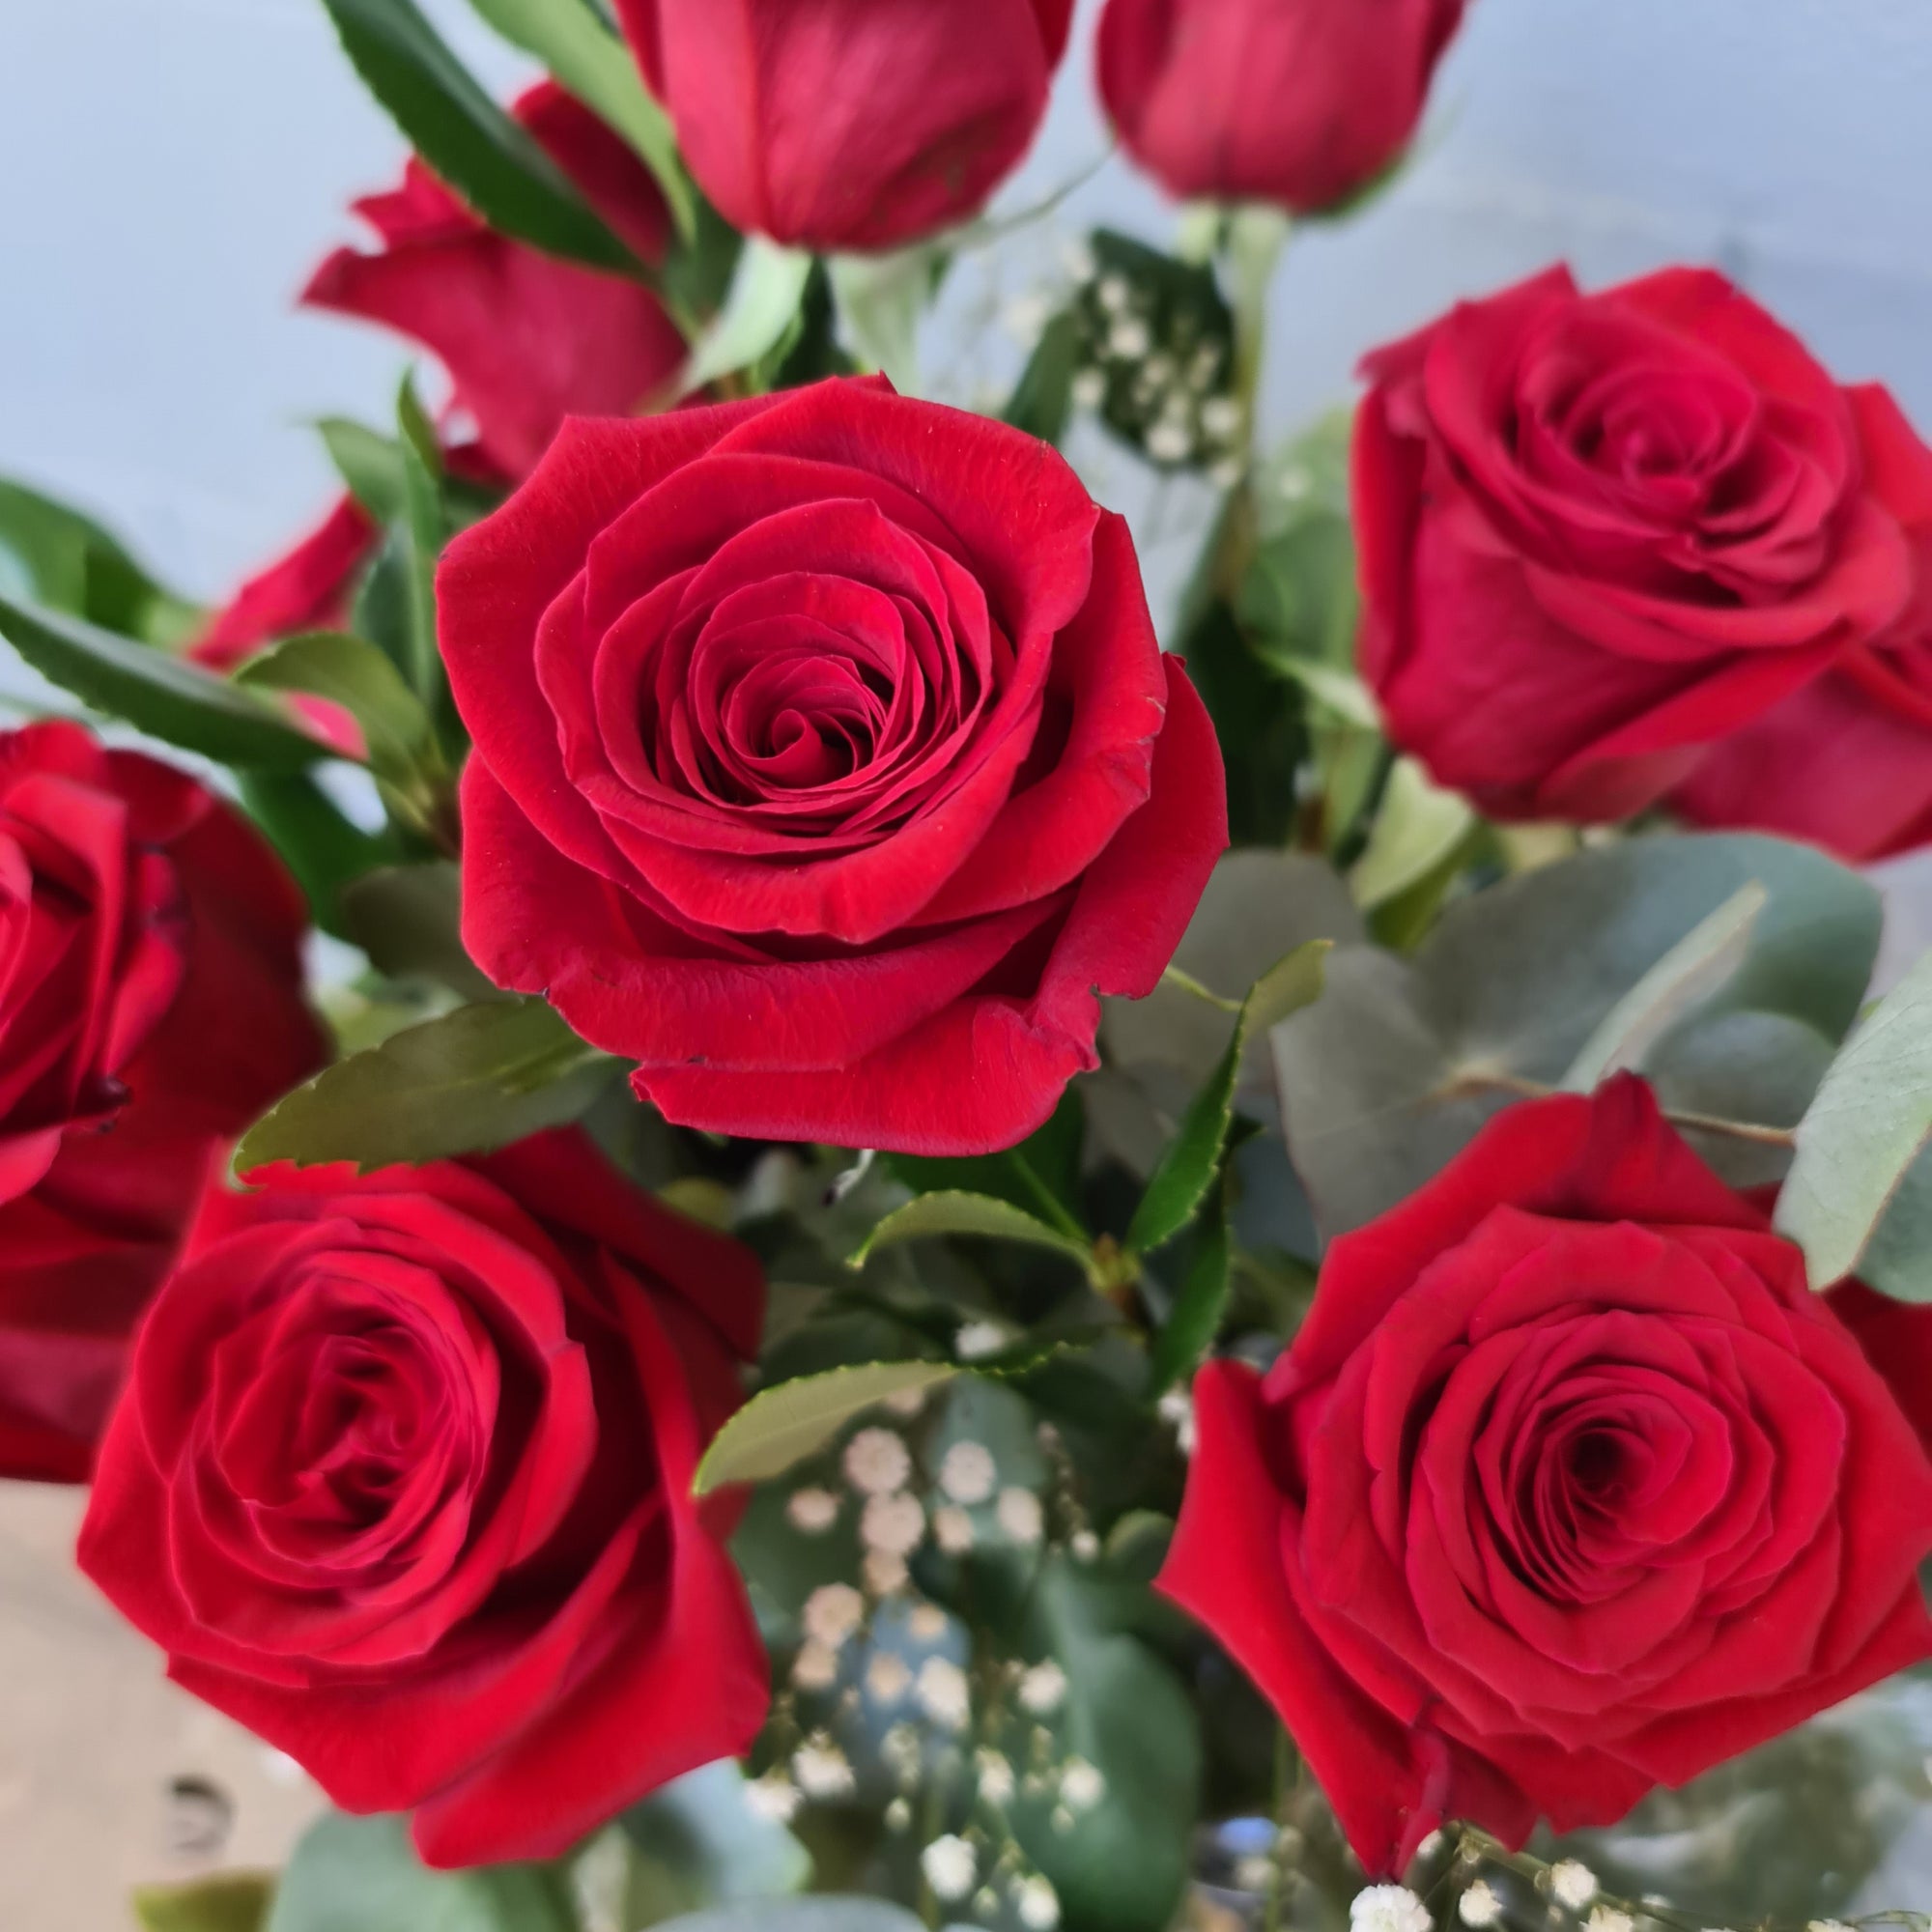 Deluxe Rose Bouquet